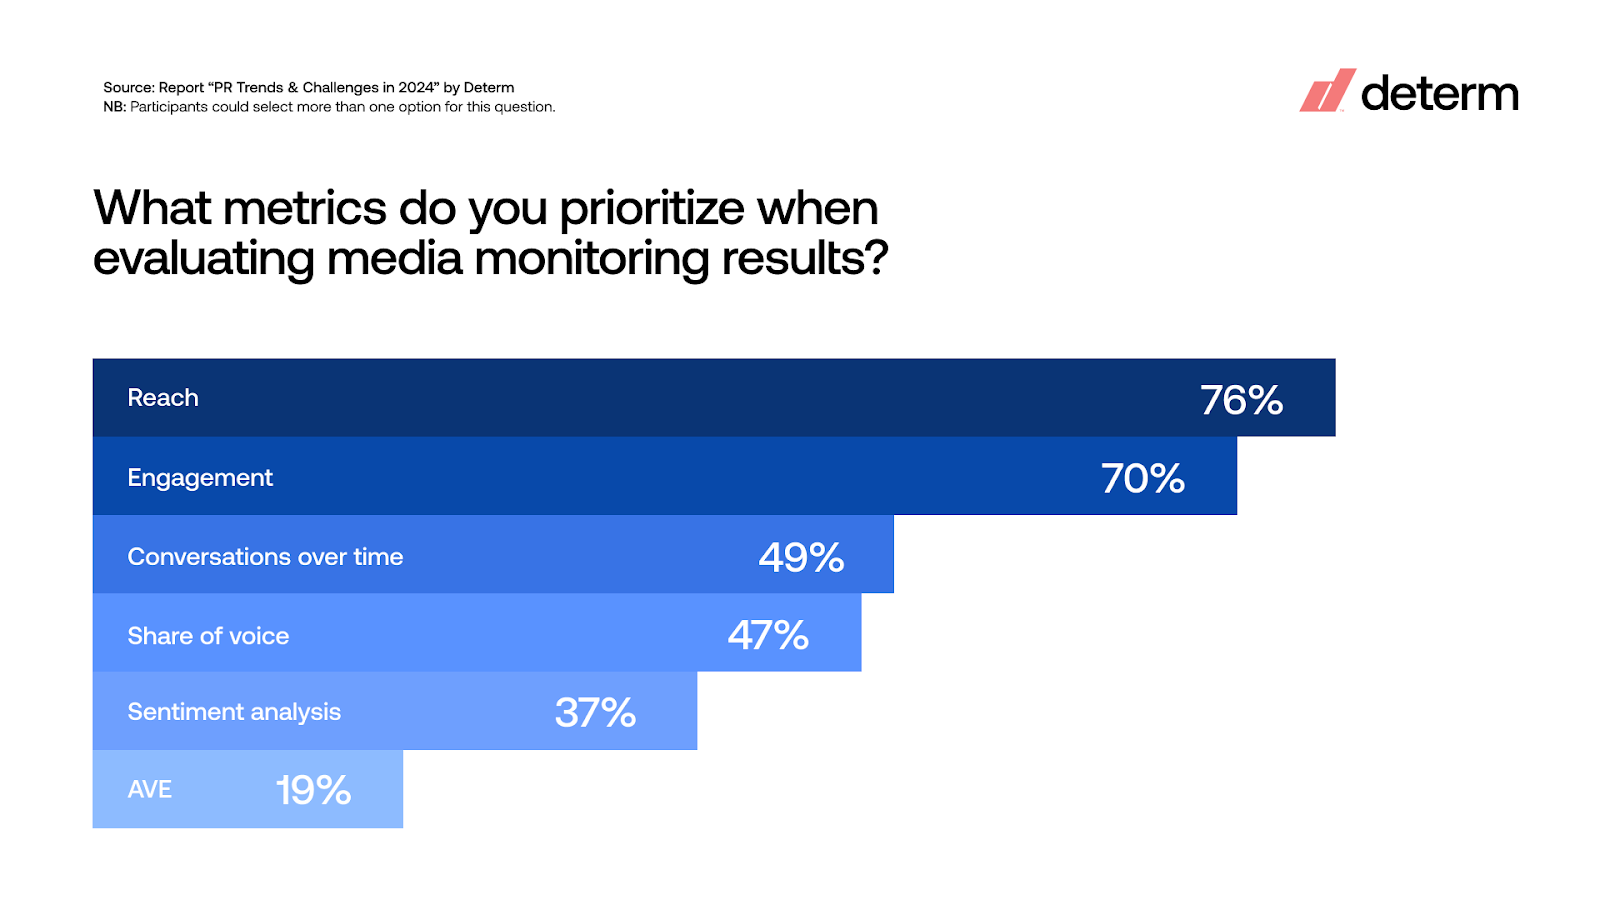 Metrics PR professionals prioritize when evaluating media monitoring results, source: Determ